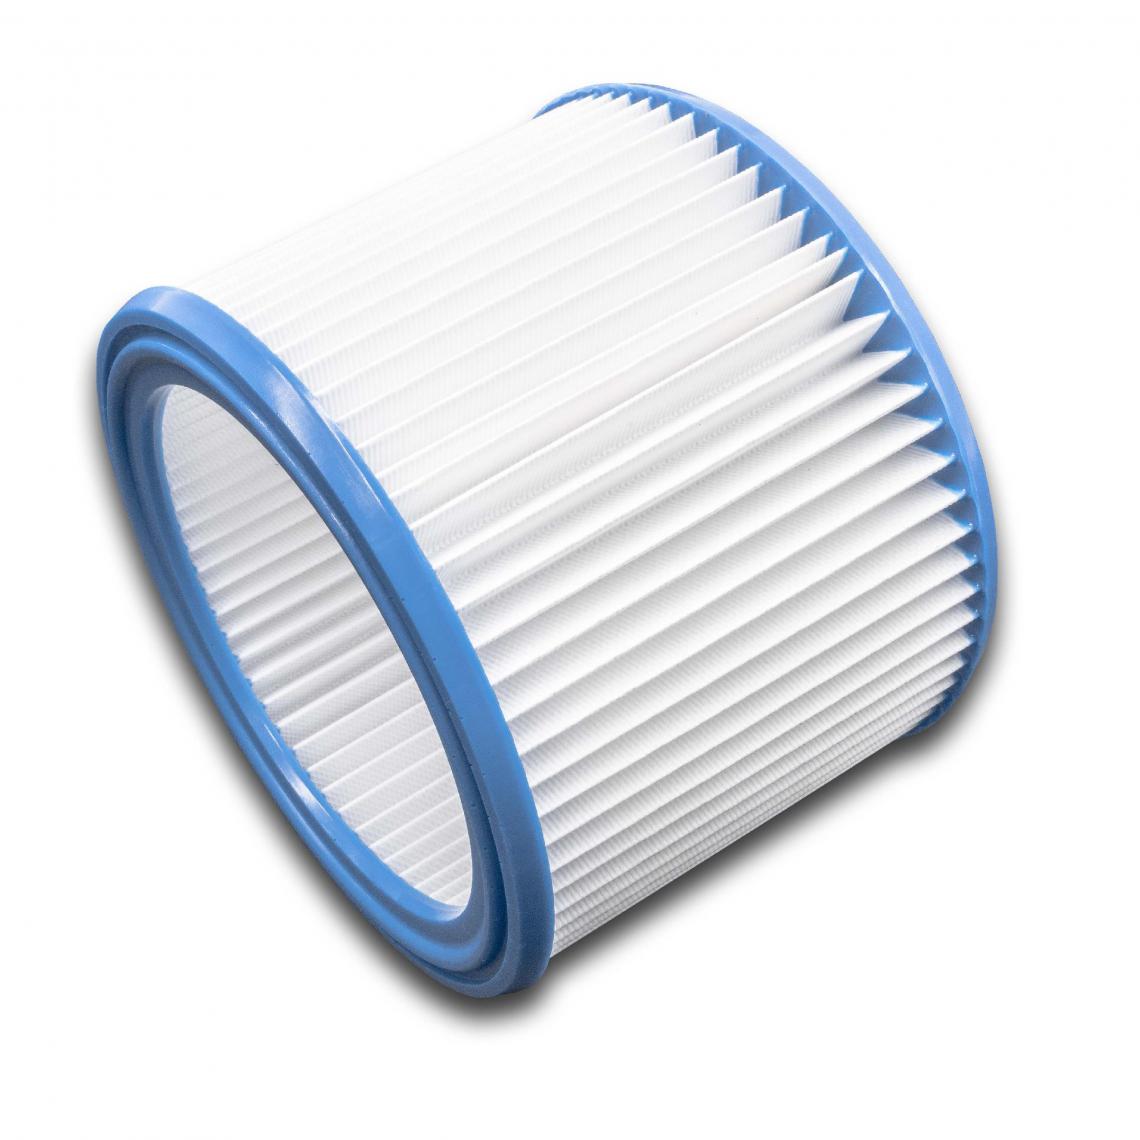 Vhbw - vhbw Set de filtres 10x Filtre plissé compatible avec Nilfisk Aero 20-01, 20-01 Inox, 20-11, 20-21 aspirateur à sec ou humide - Filtre à cartouche - Accessoire entretien des sols